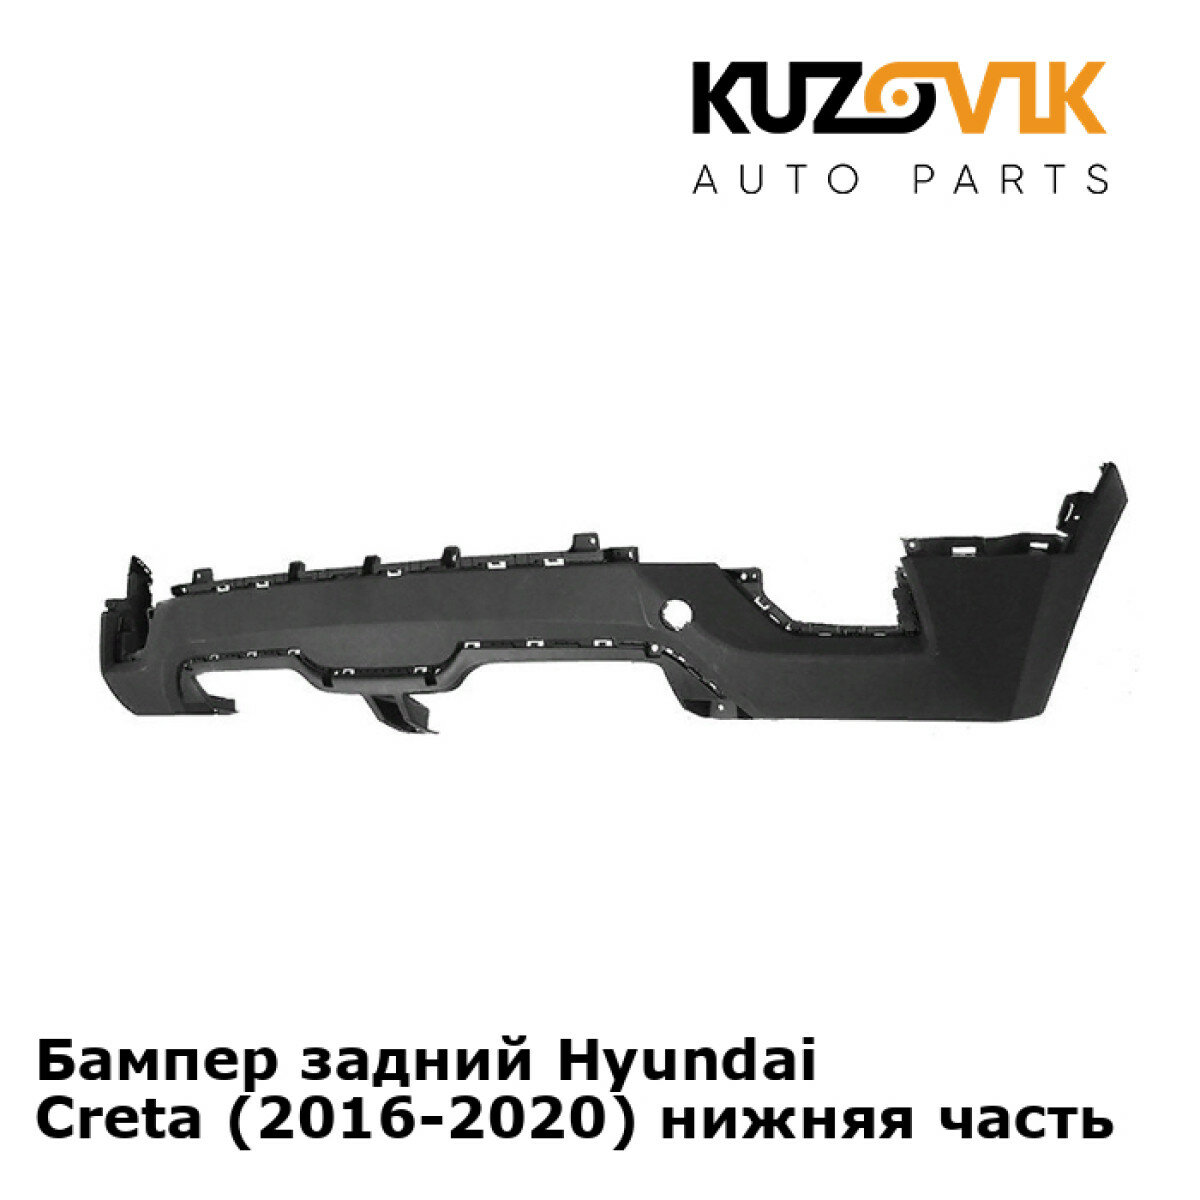 Бампер задний Hyundai Creta (2016-2020) нижняя часть